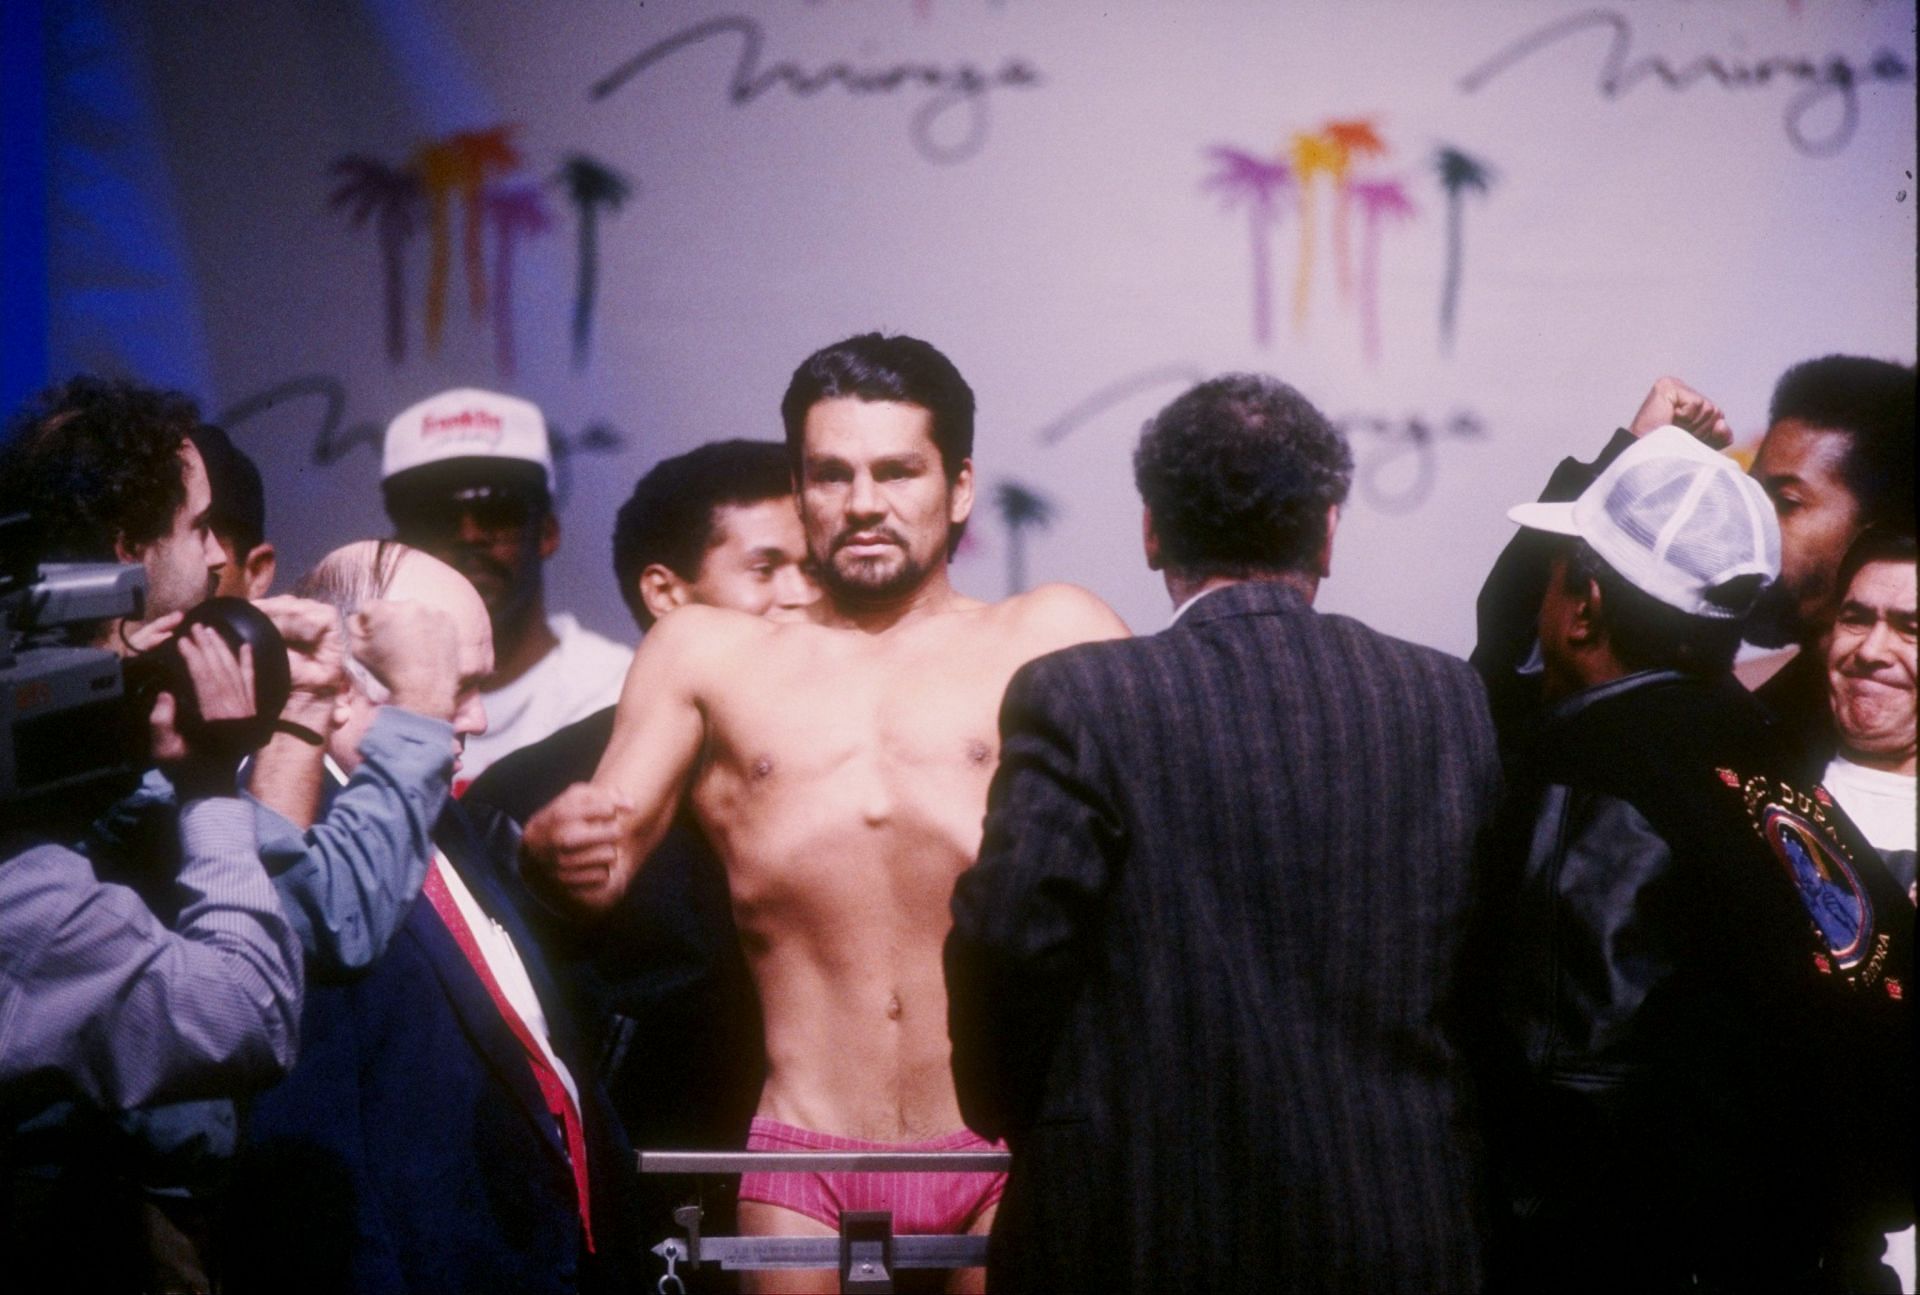 Roberto Duran weighing in (1980s)